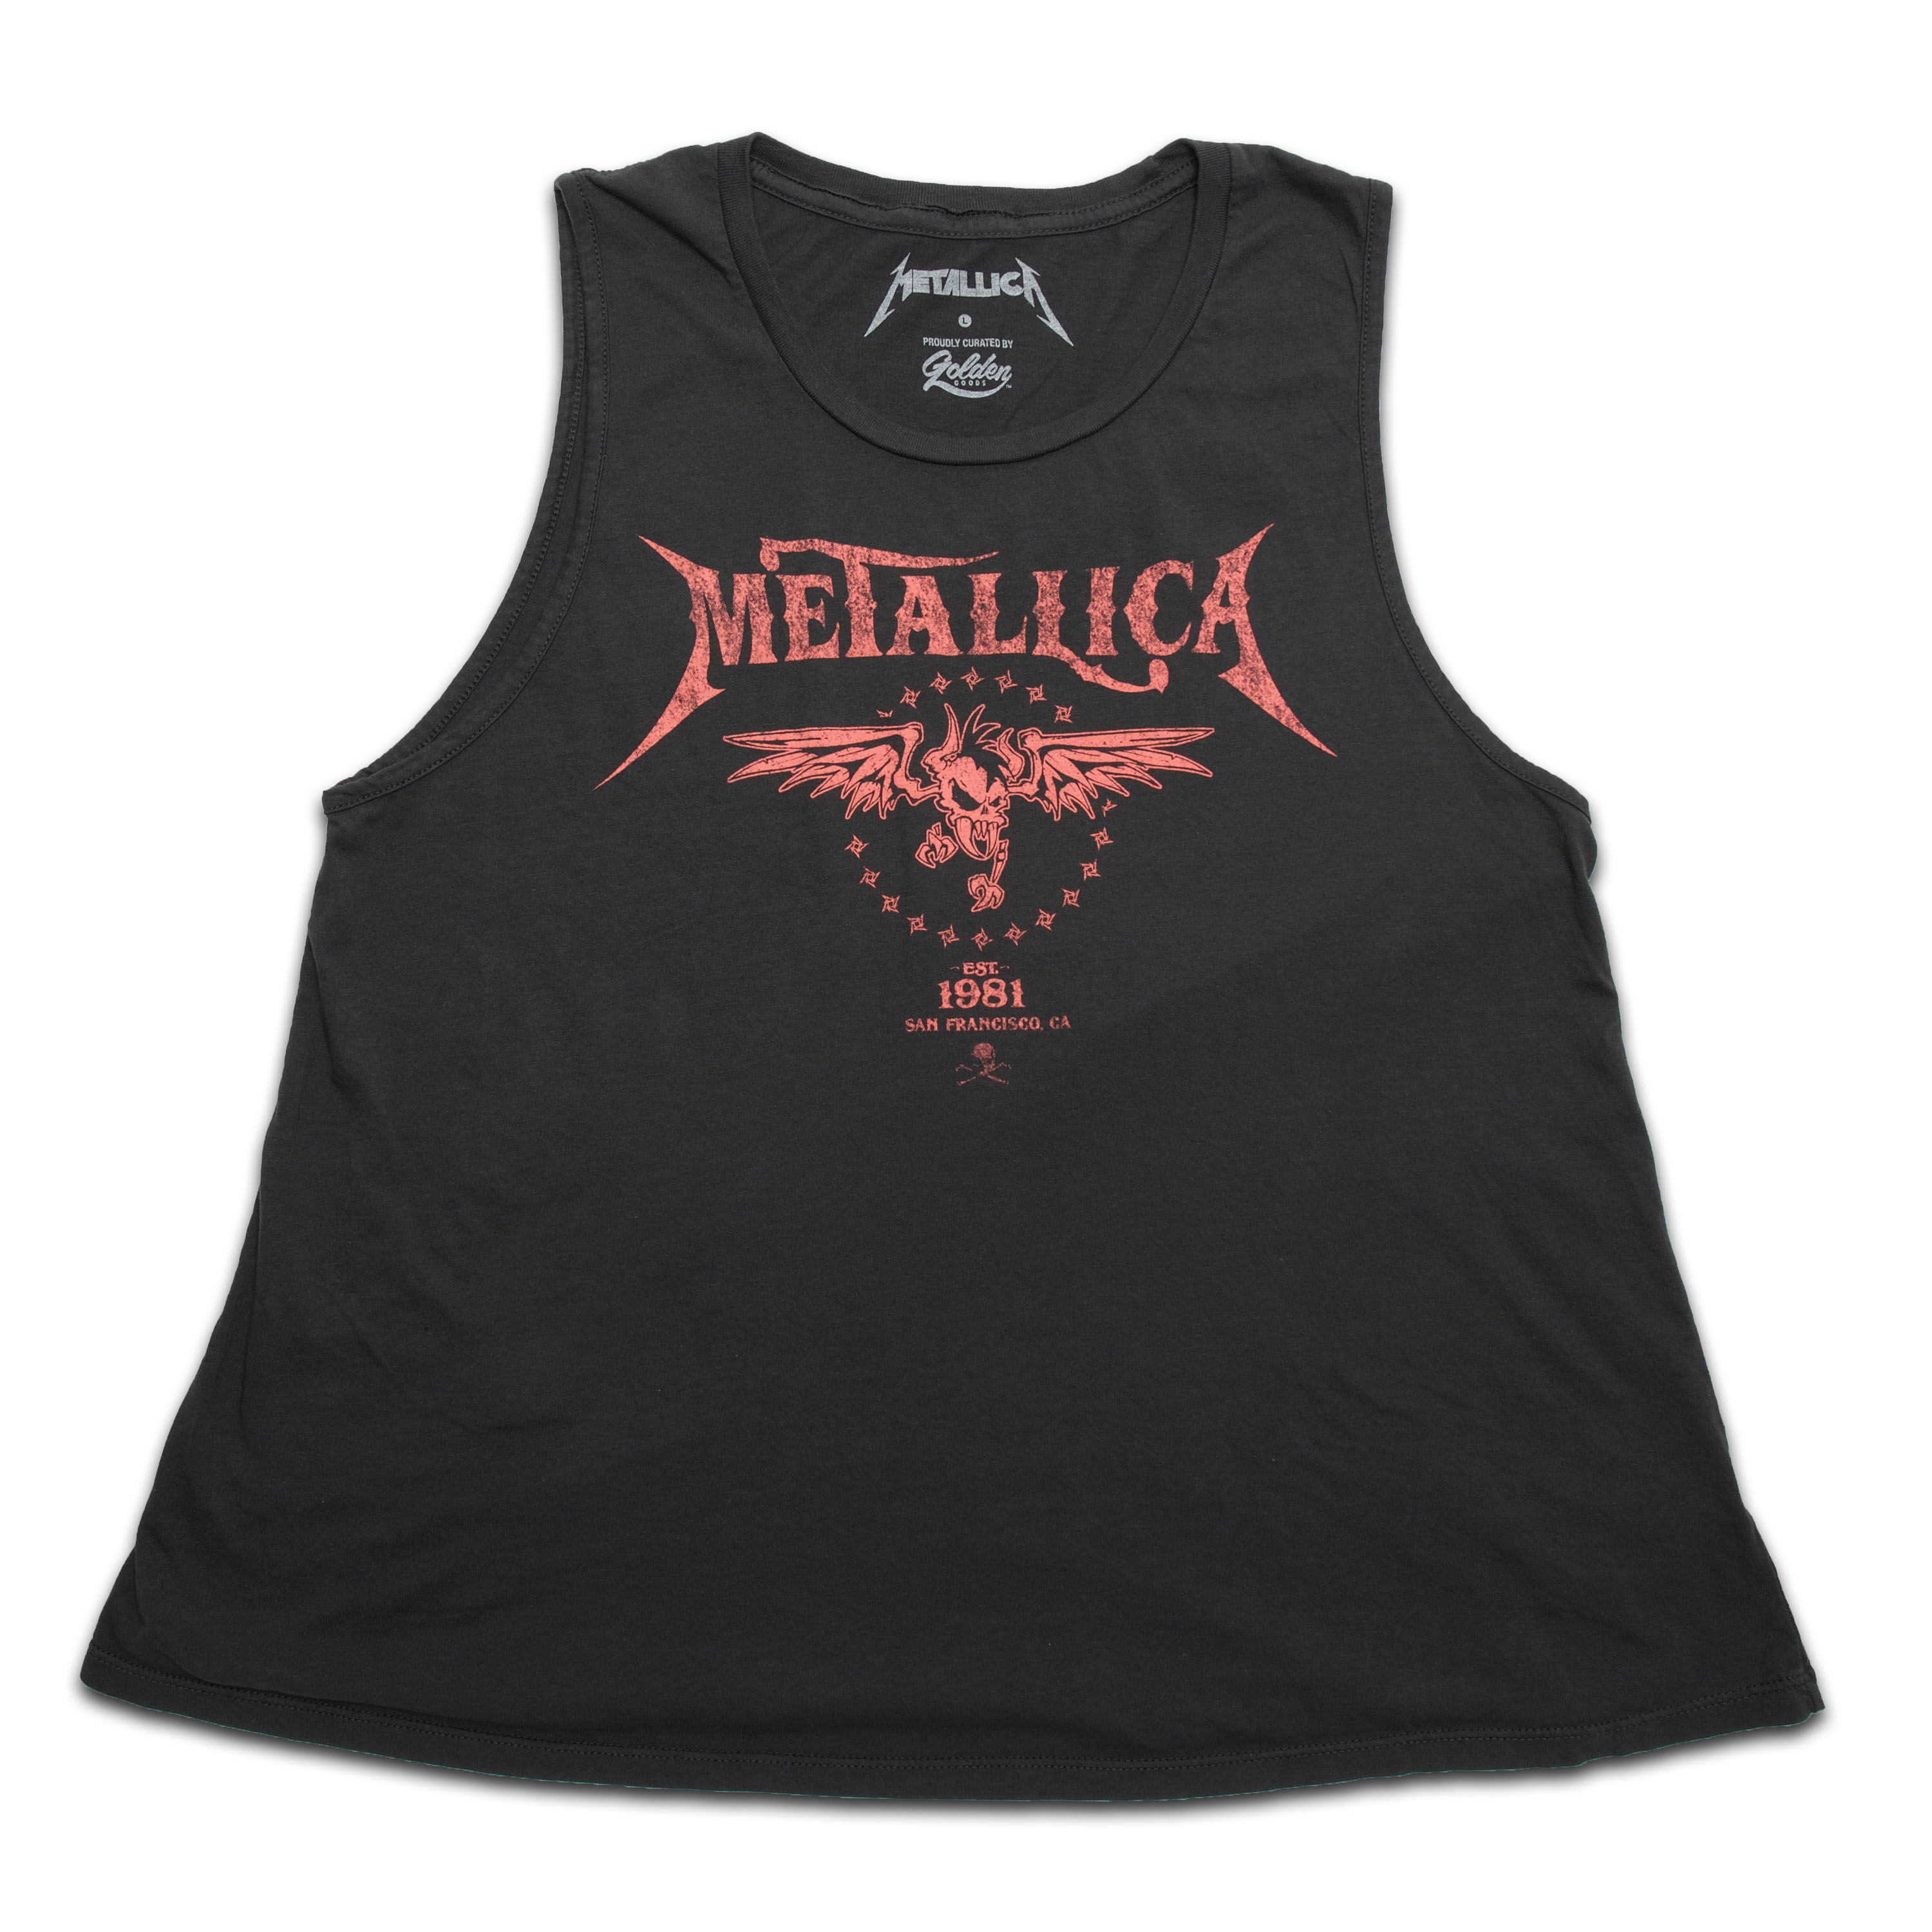 Distressed Metallica Cut Off Tee Kleding Gender-neutrale kleding volwassenen Tops & T-shirts Tanktops Tanktops met print 